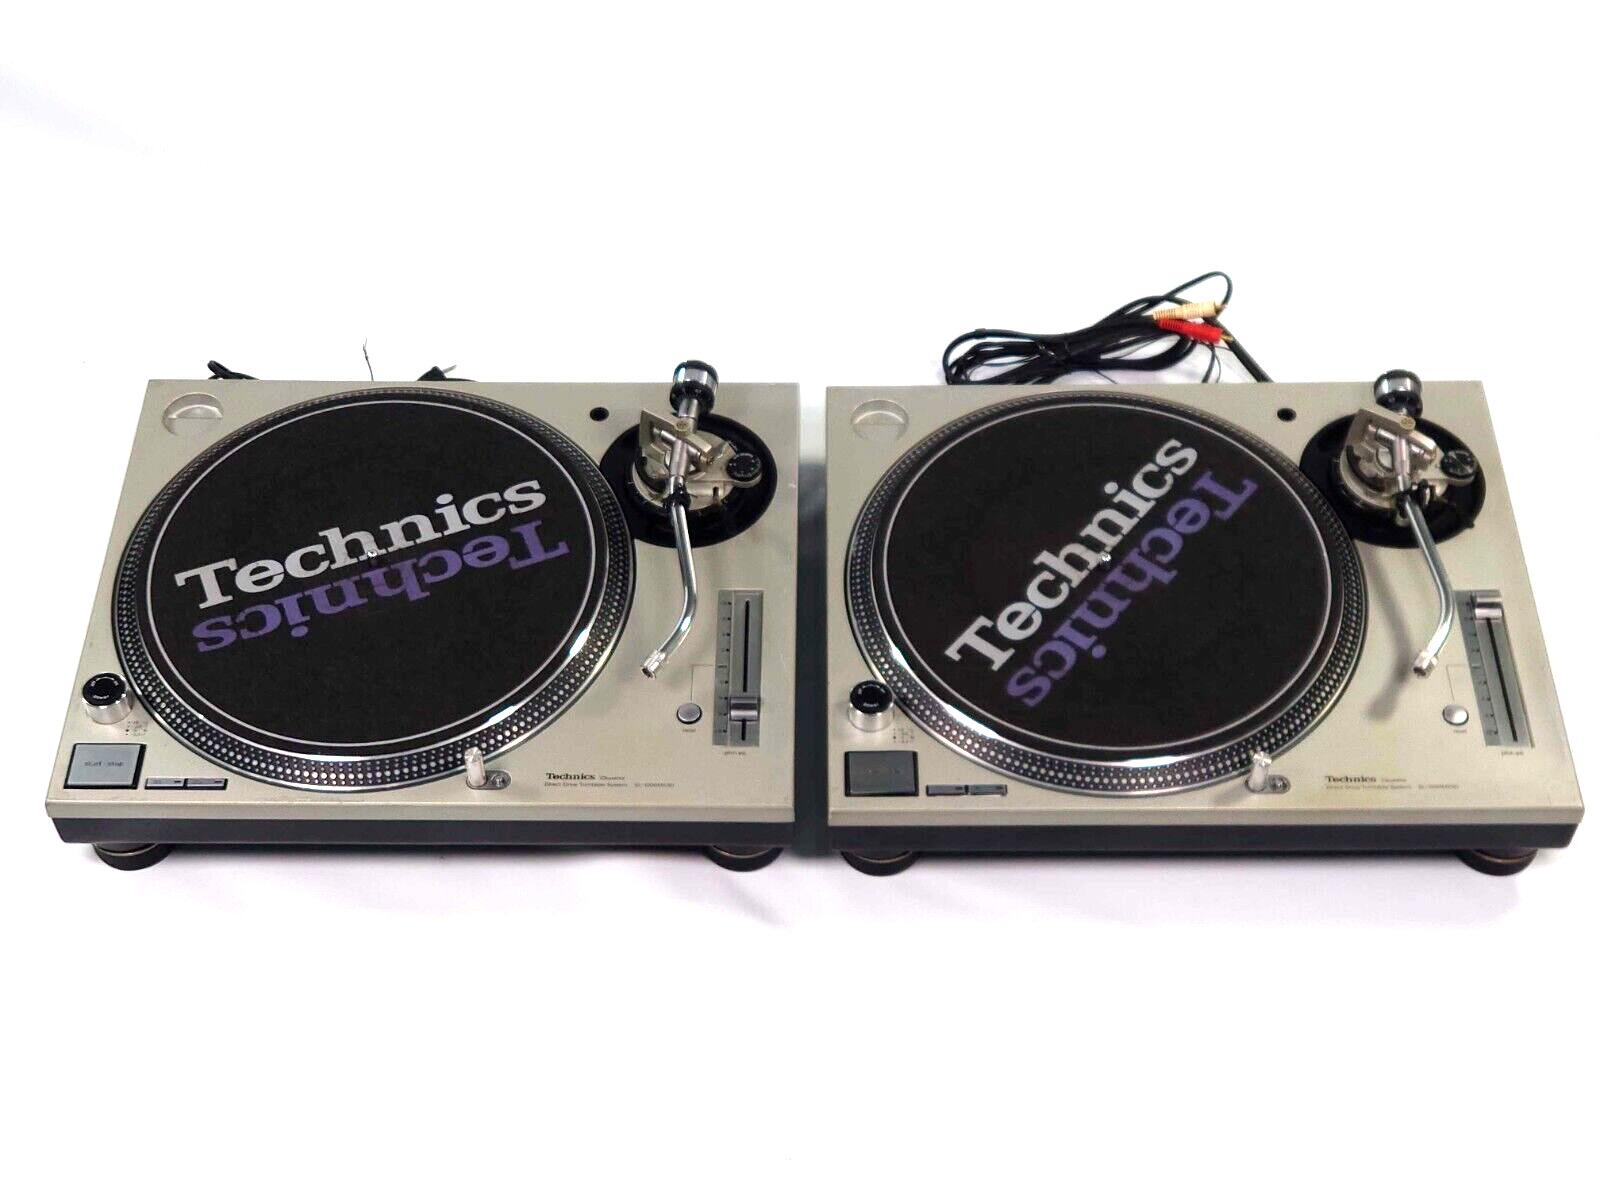 Technics SL-1200 MK3D Silver Set Direct Drive DJ Turntables Maintained Excellent